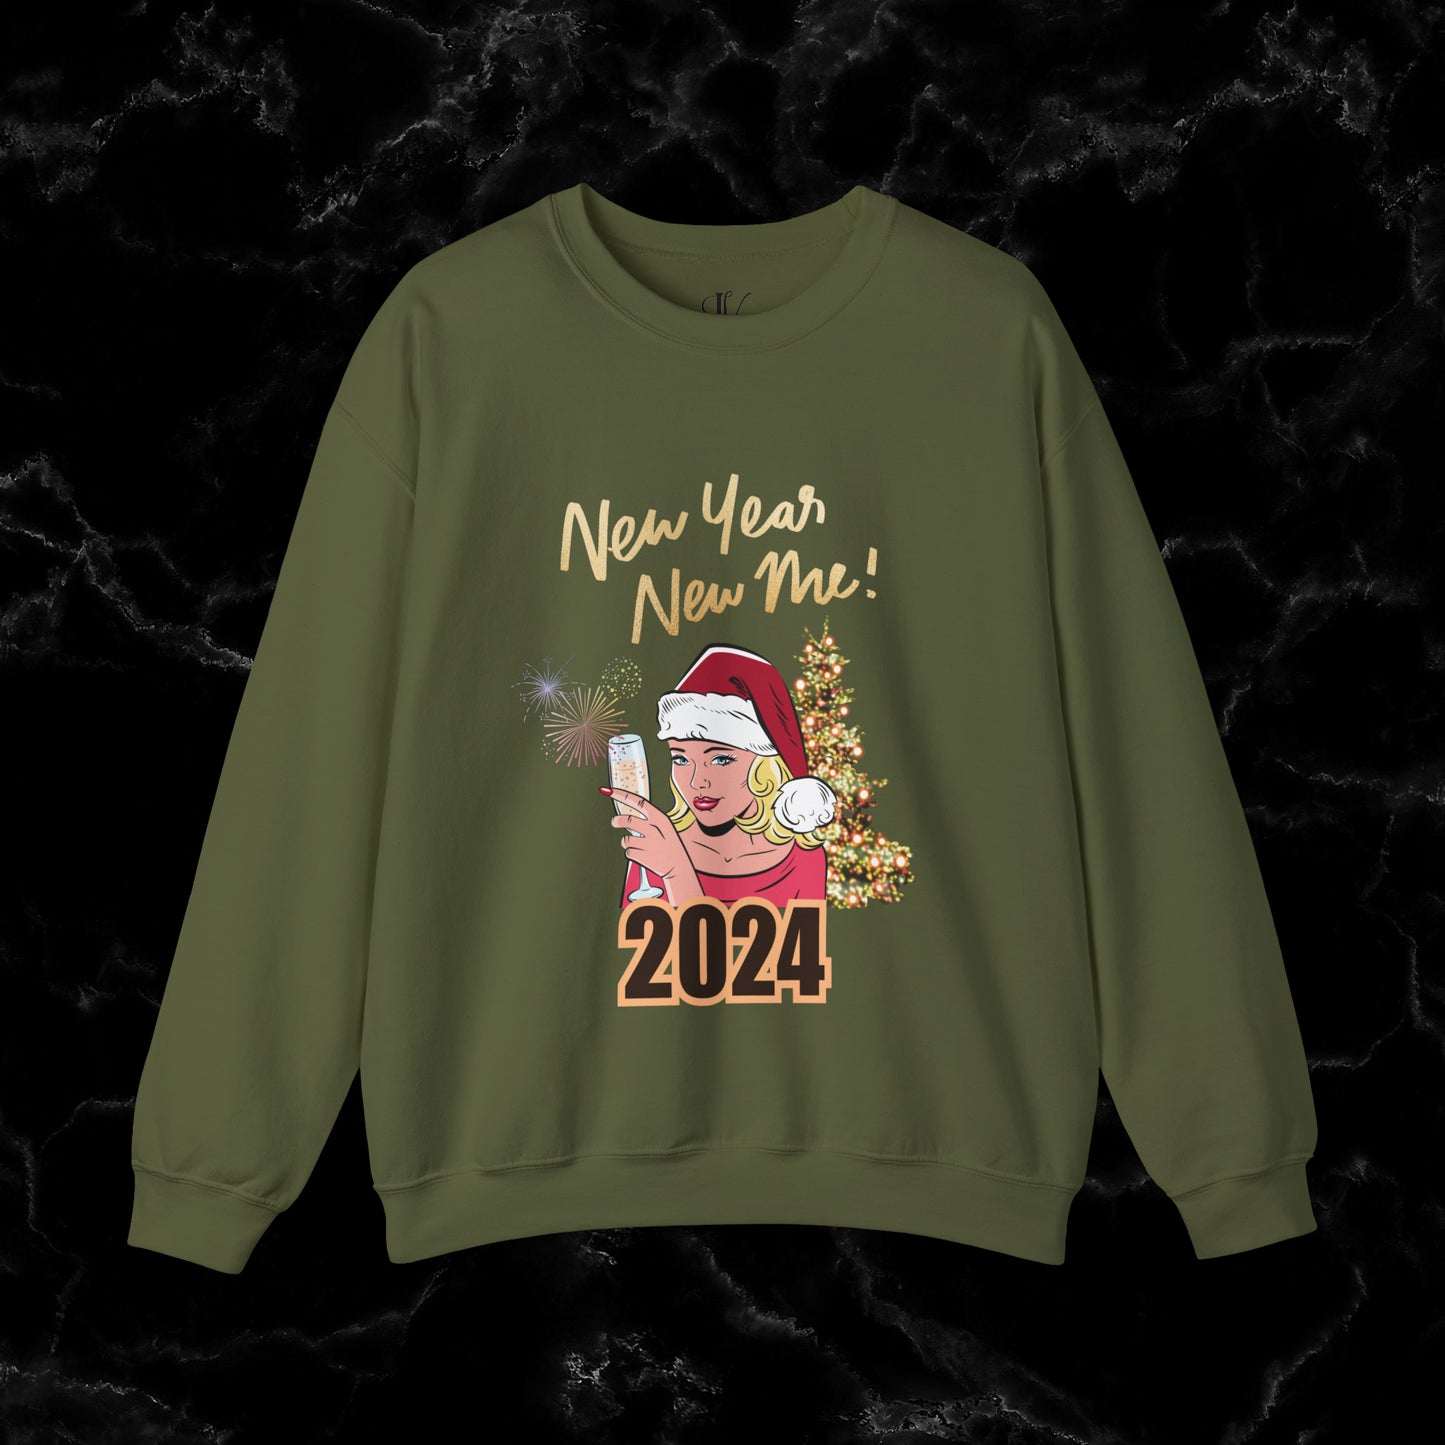 New Year New Me Sweatshirt - Motivational, Inspirational Resolutions Shirt, Christmas Family Tee Sweatshirt S Military Green 